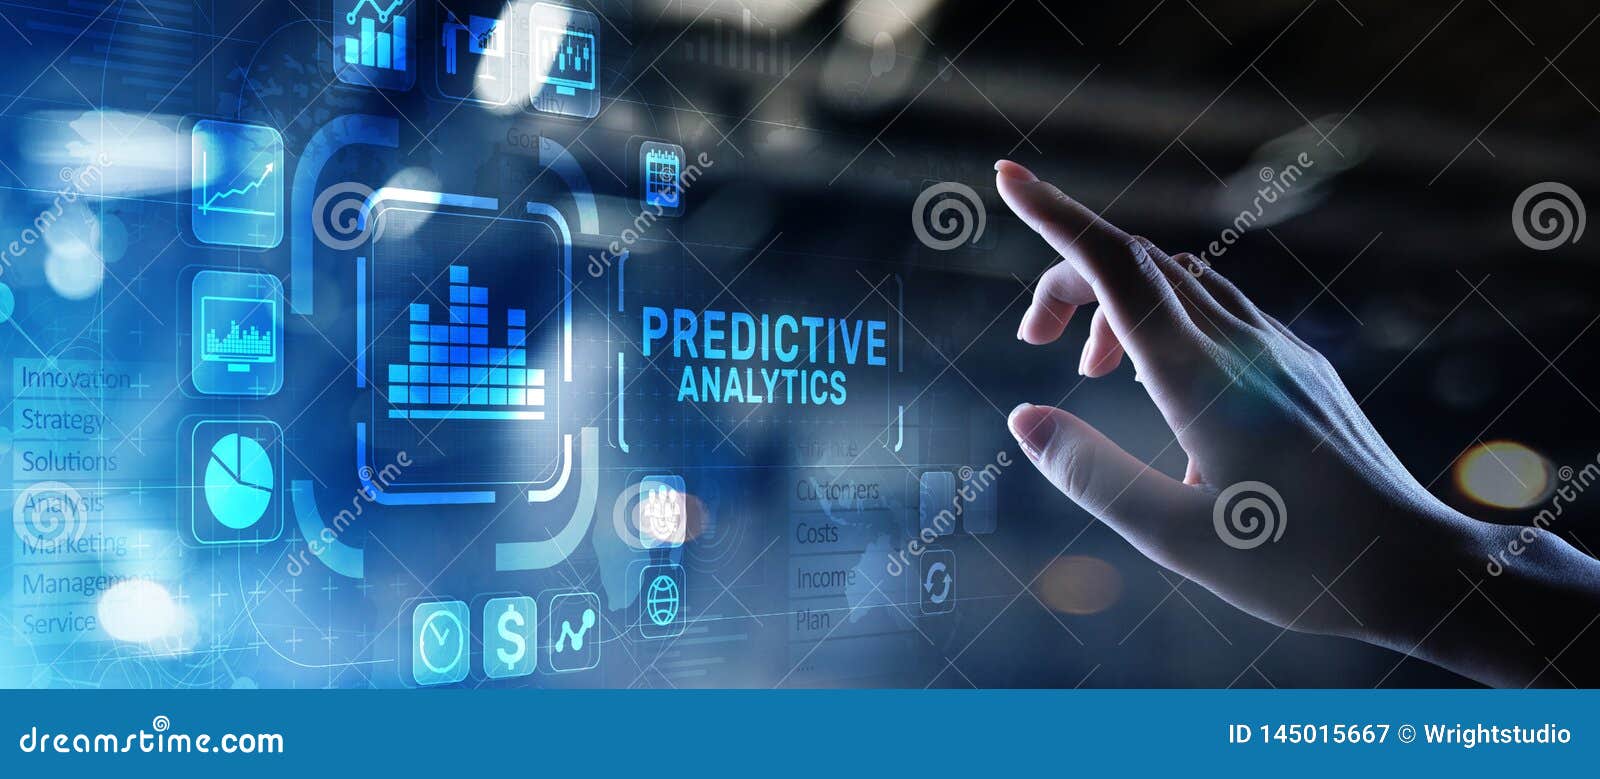 predictive analytics big data analysis business intelligence internet and modern technology concept on virtual screen.